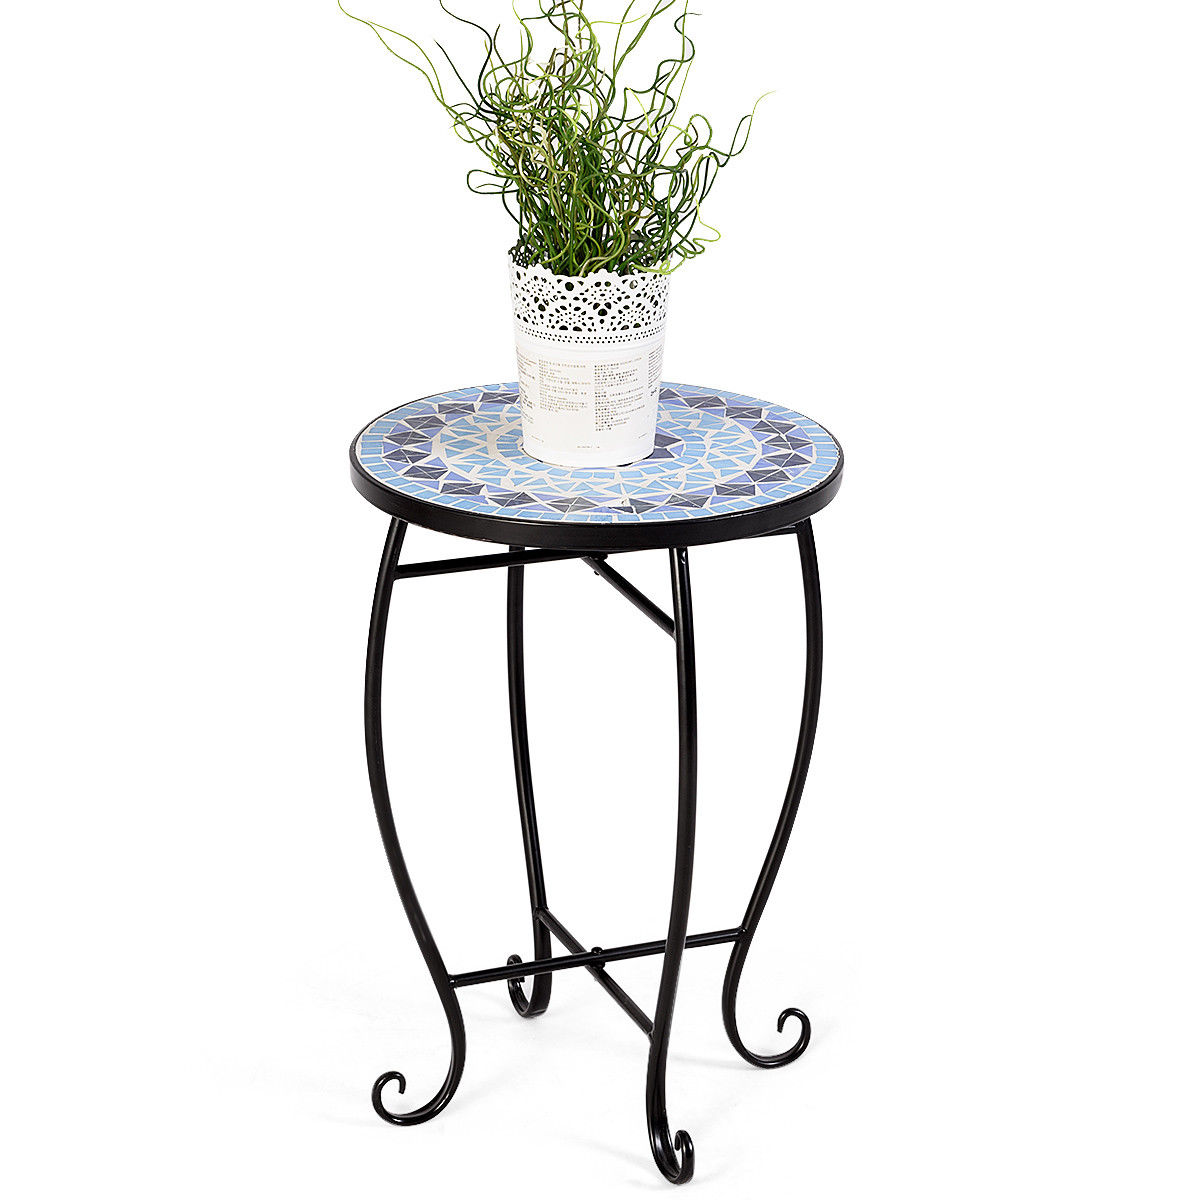 Costway Outdoor Indoor Accent Table,Mosaic Patio Table, Plant Stand Cobalt Blue Color Scheme Garden Steel - image 5 of 10